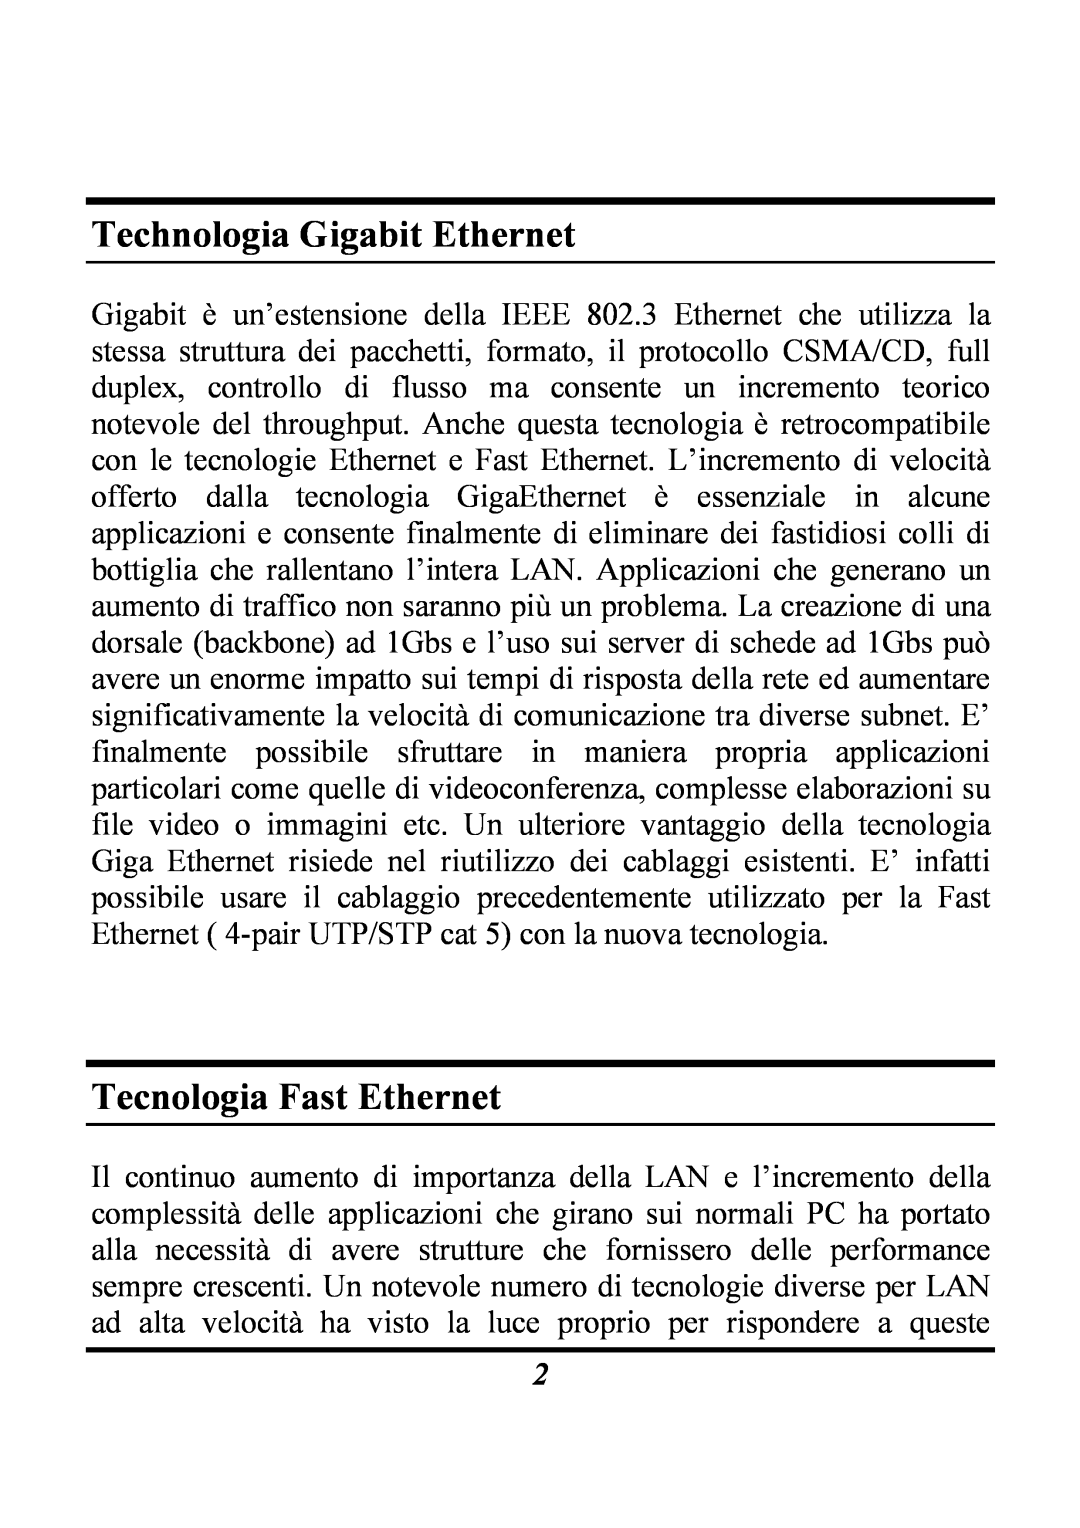 Atlantis Land Gigabit Ethernet Card manual Technologia Gigabit Ethernet, Tecnologia Fast Ethernet 